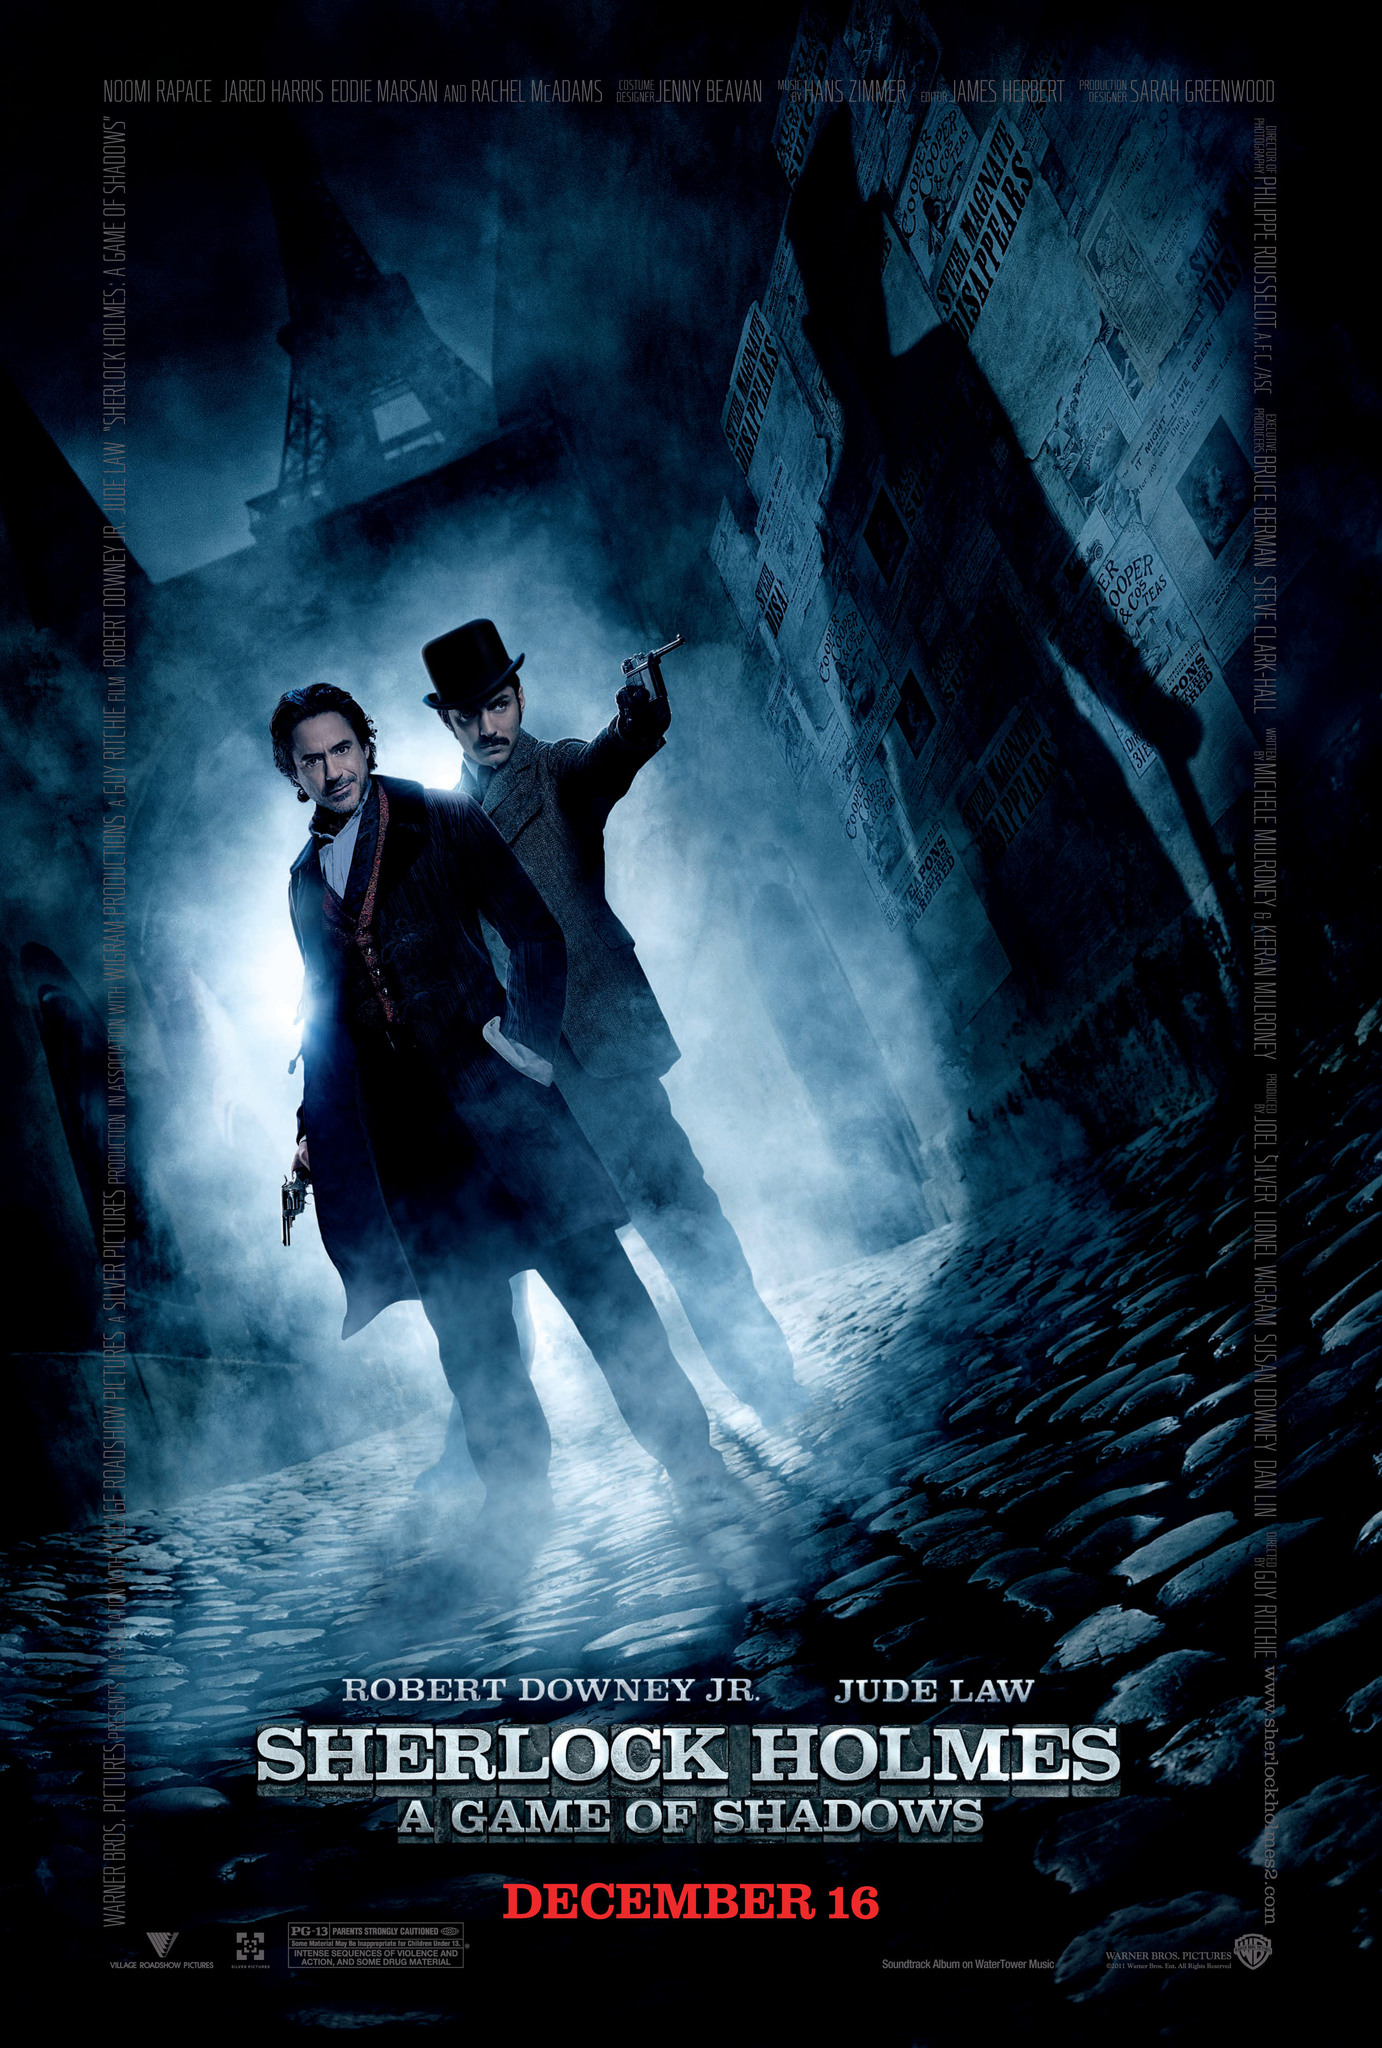 Sherlock Holmes 2 A Game Of Shadows (2011) เชอร์ล็อค โฮล์มส์ 2 เกมพญายมเงามรณะ Robert Downey Jr.